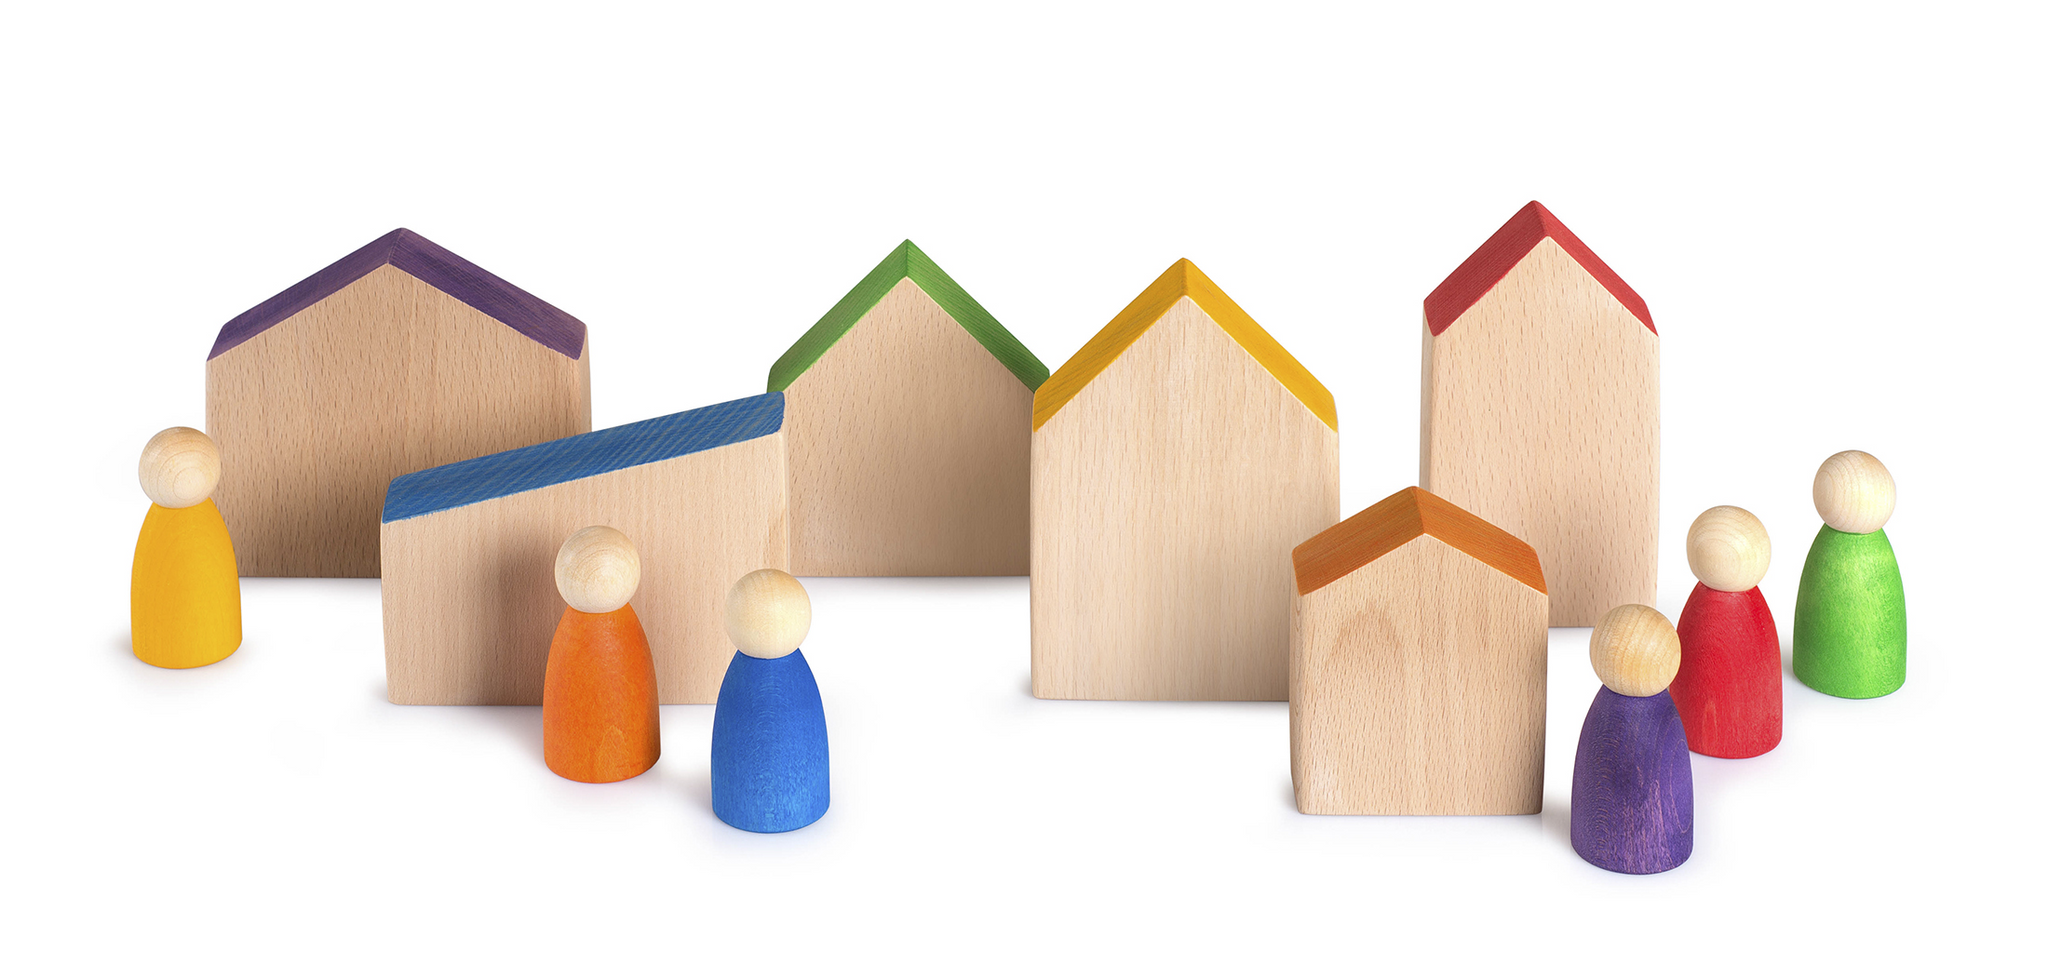 Wood coloured houses and nins - grapat